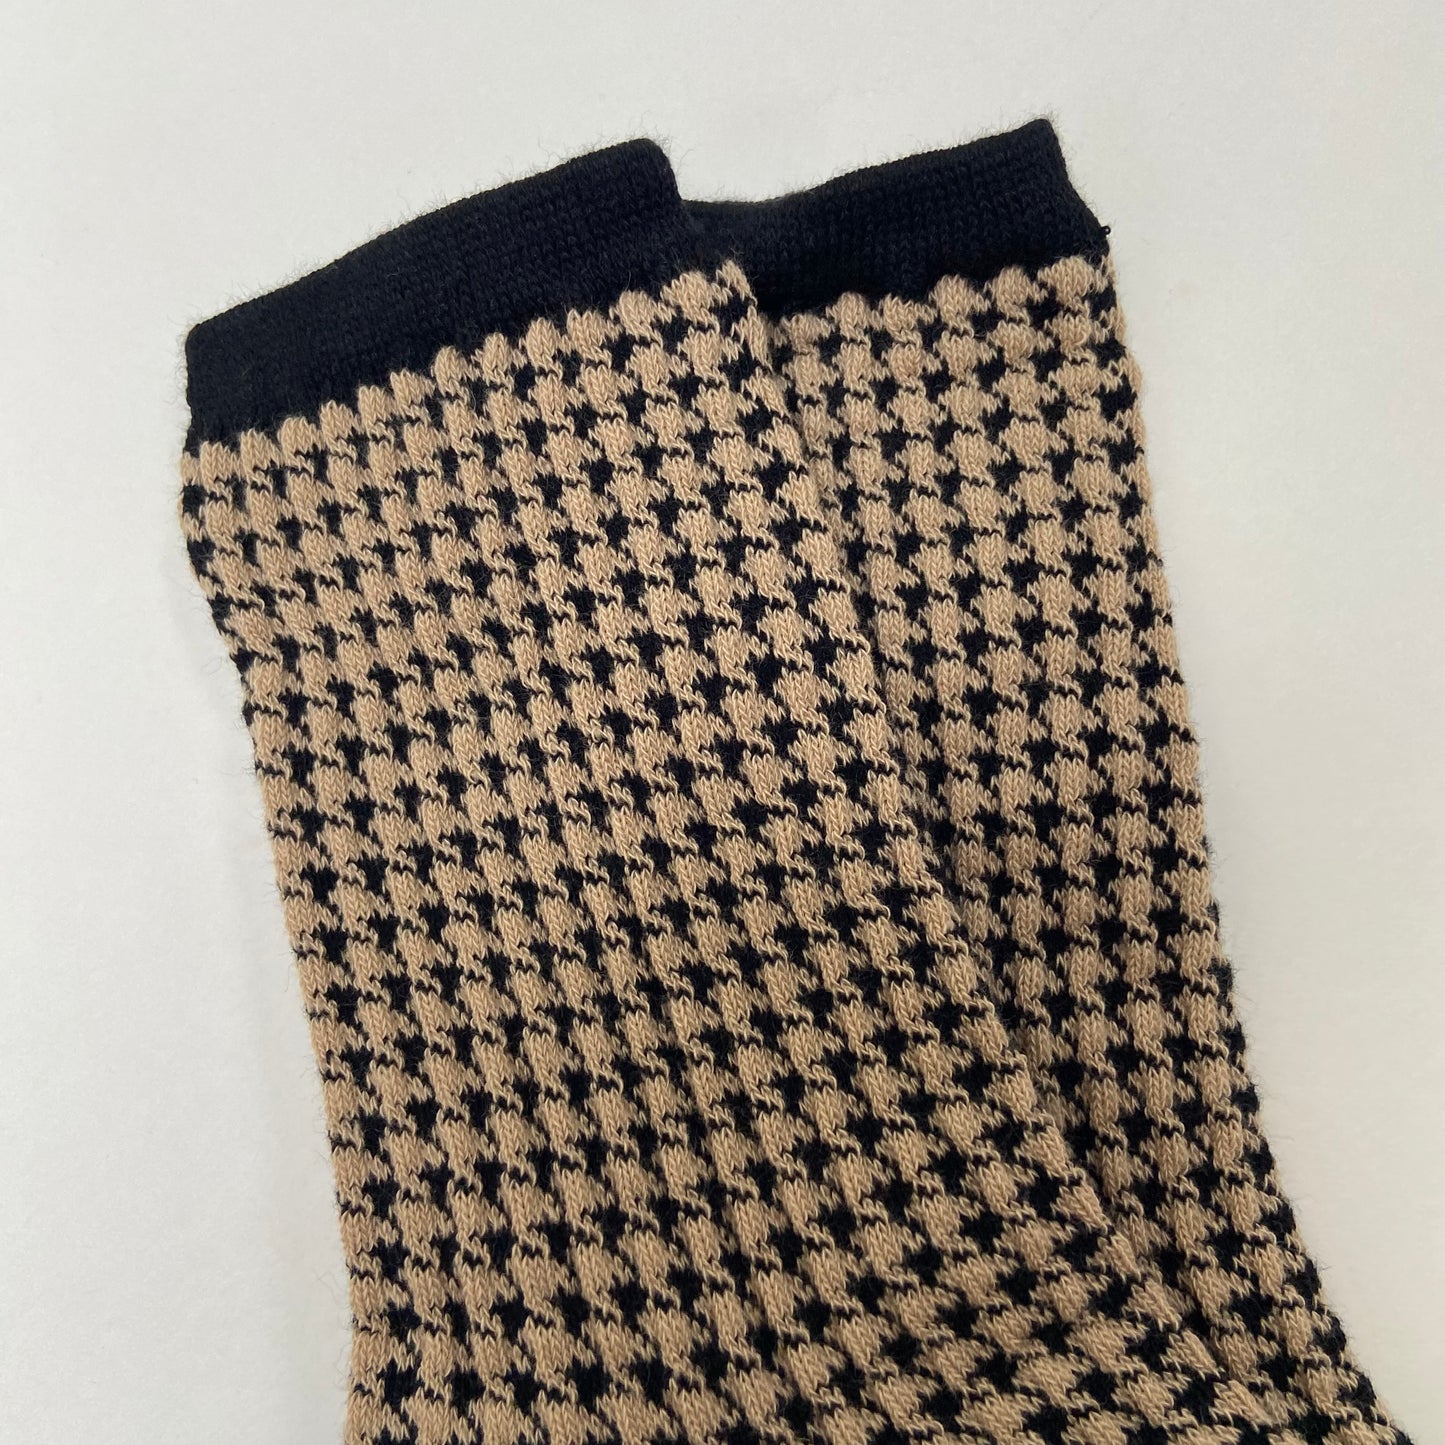 Dogtooth & Monochrome Stripe Socks